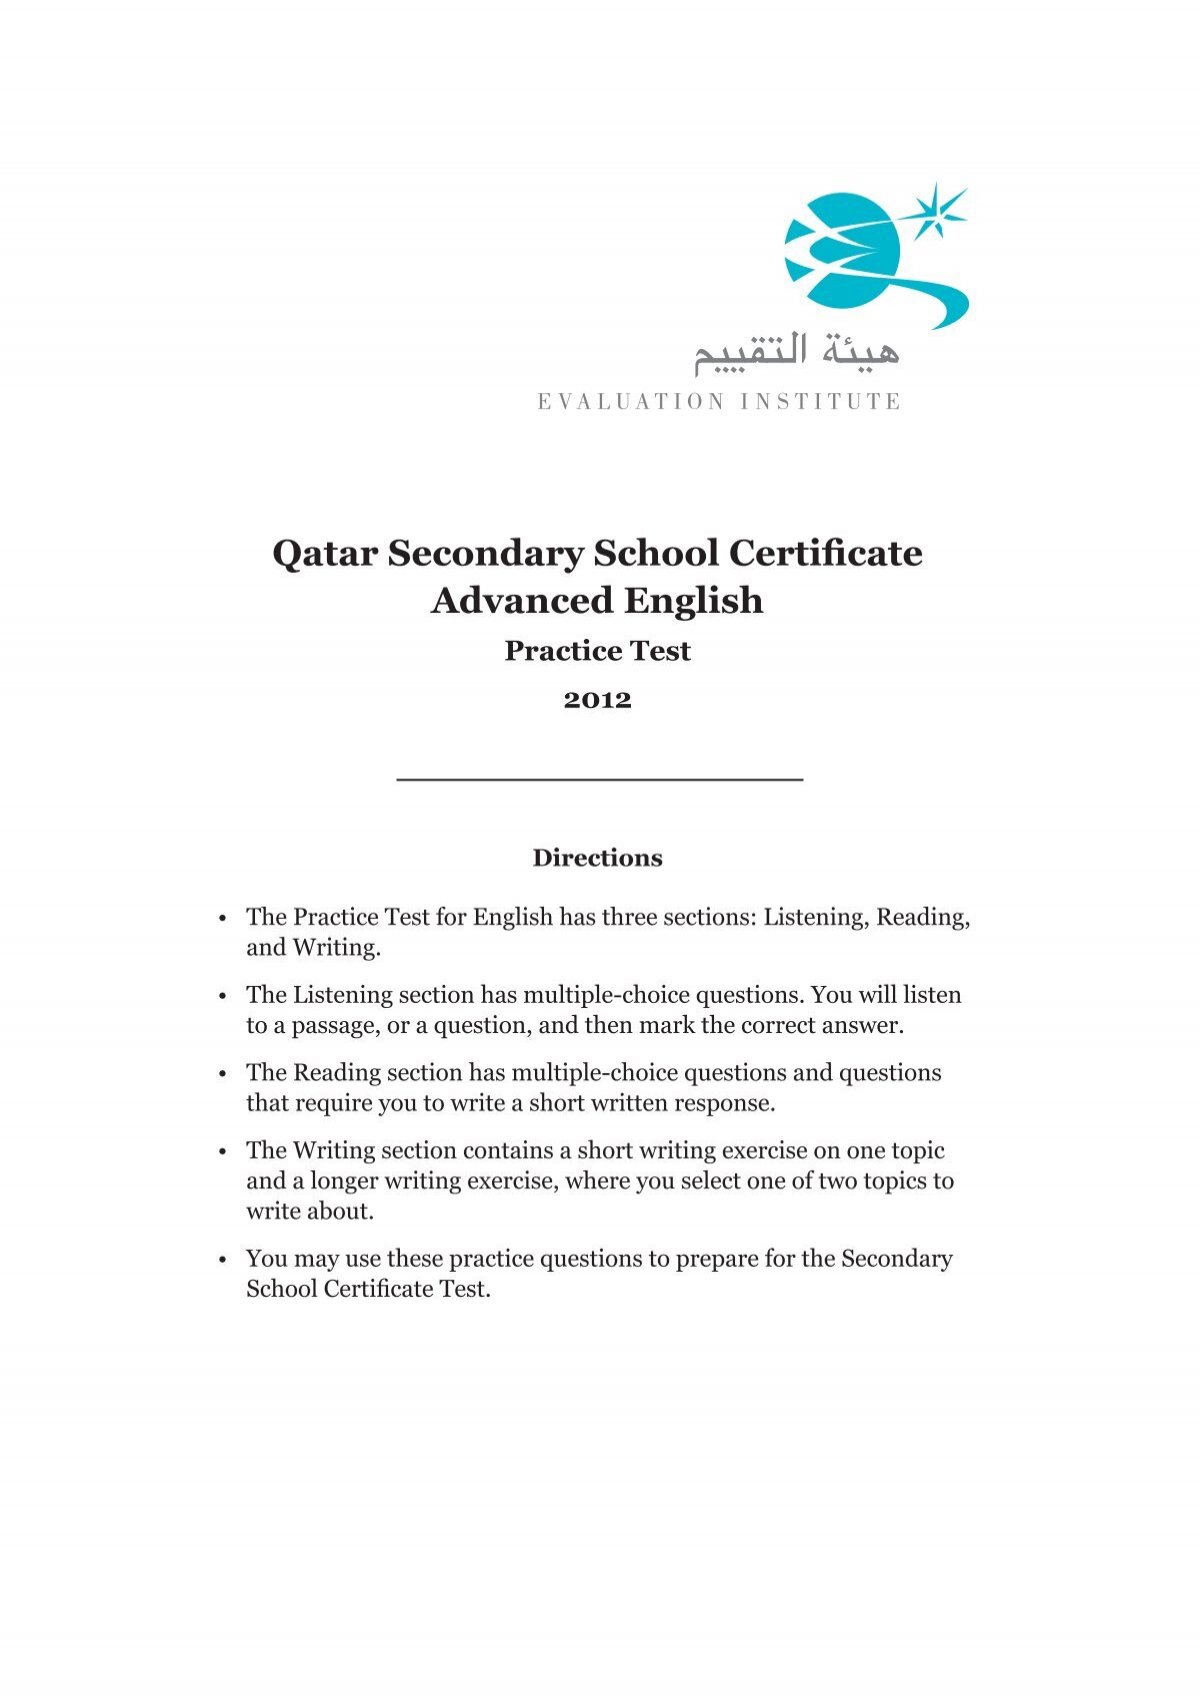 Qatar Secondary School Certificate Advanced English